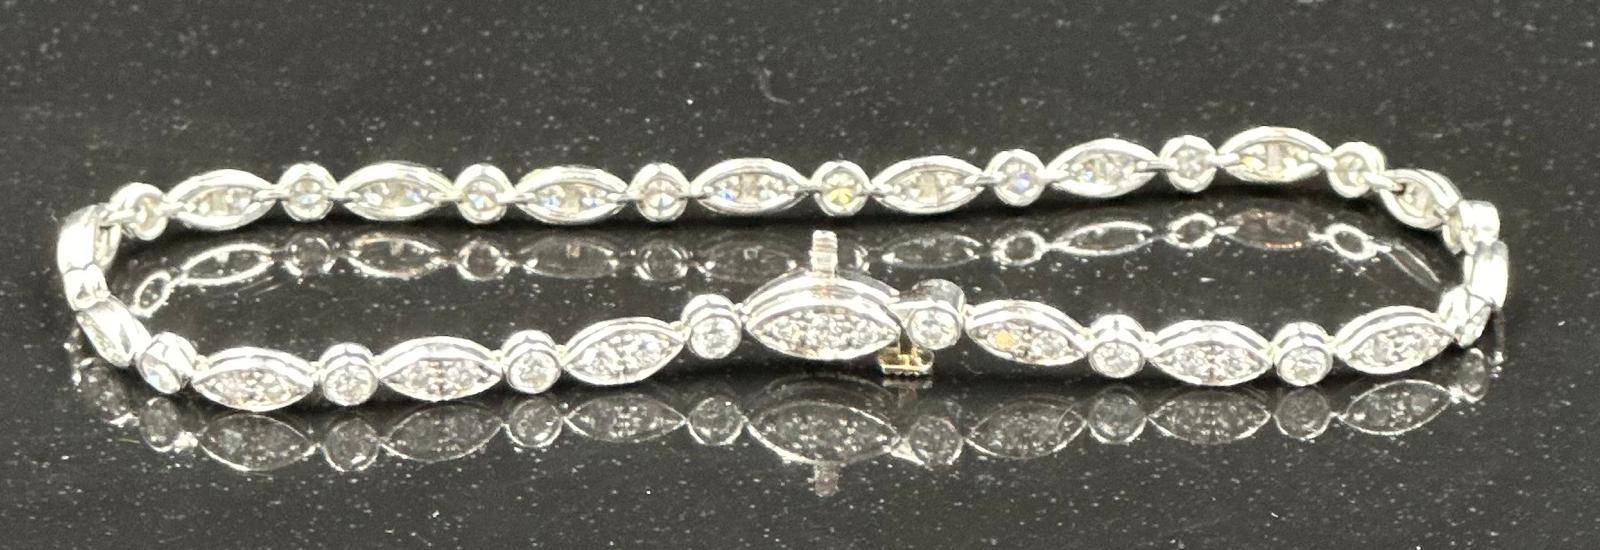 Tiffany diamond bracelet mounted in platinum. Signed Tiffany 950. Total diamond weight approximately - Image 2 of 7